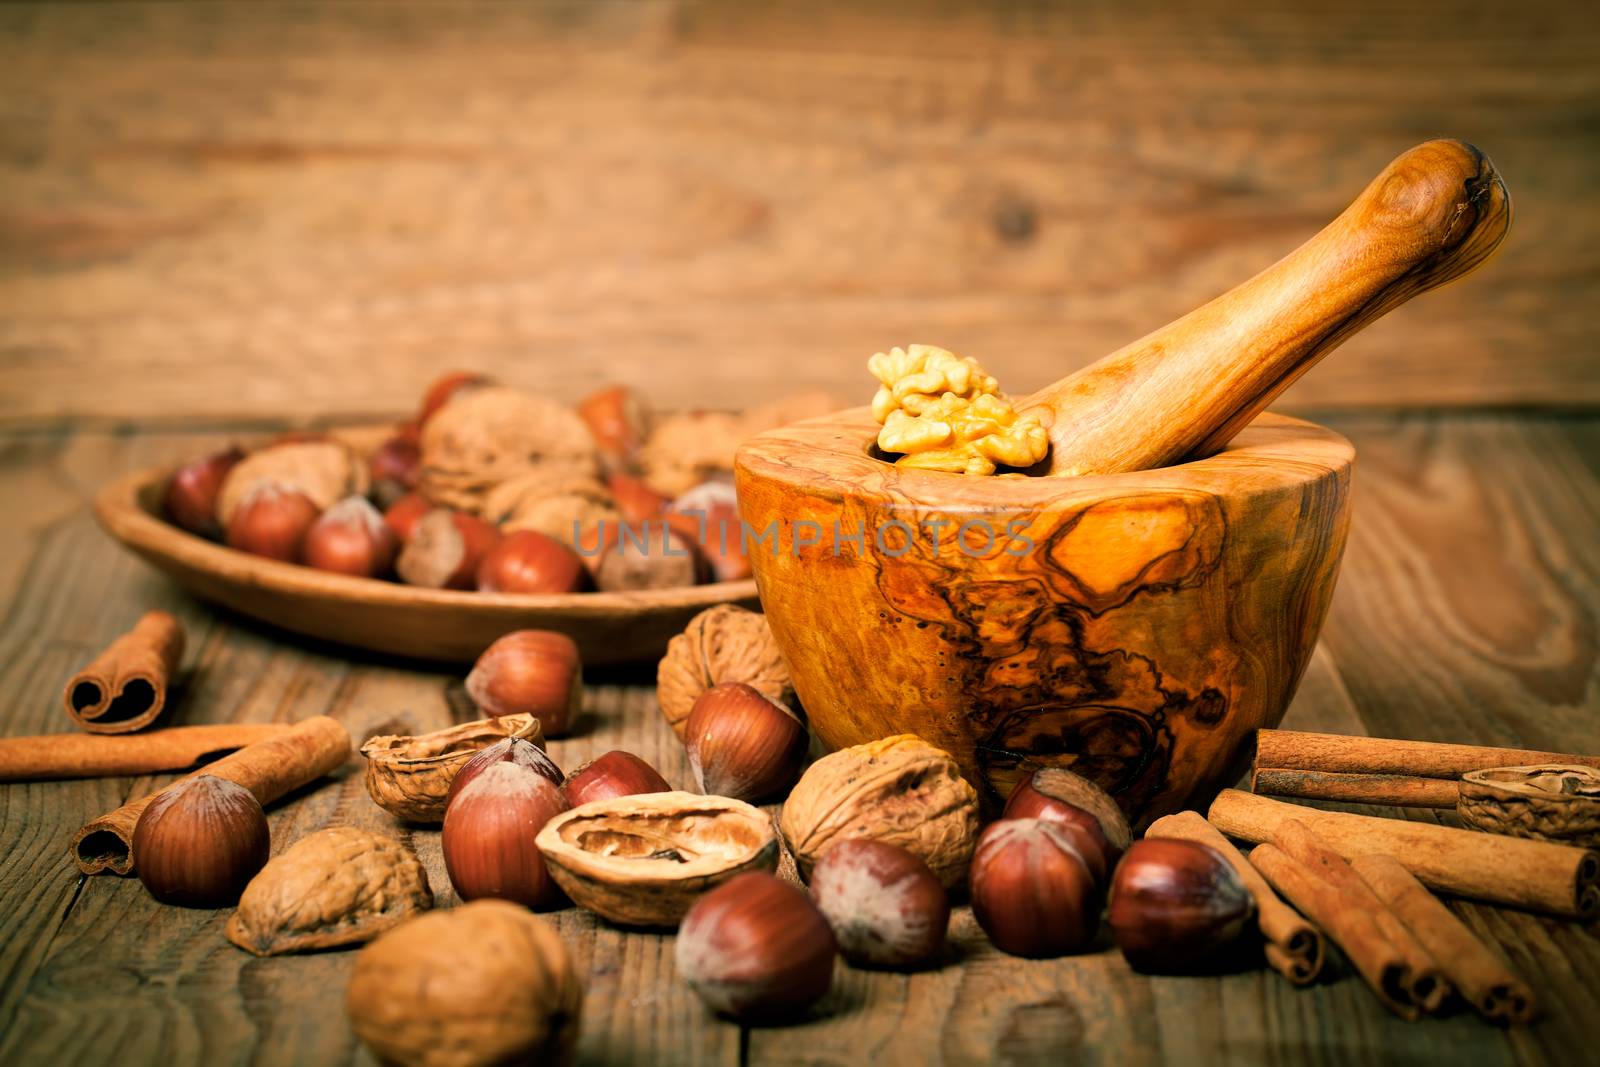 Hazelnuts in a wooden bowl on rustic background by motorolka